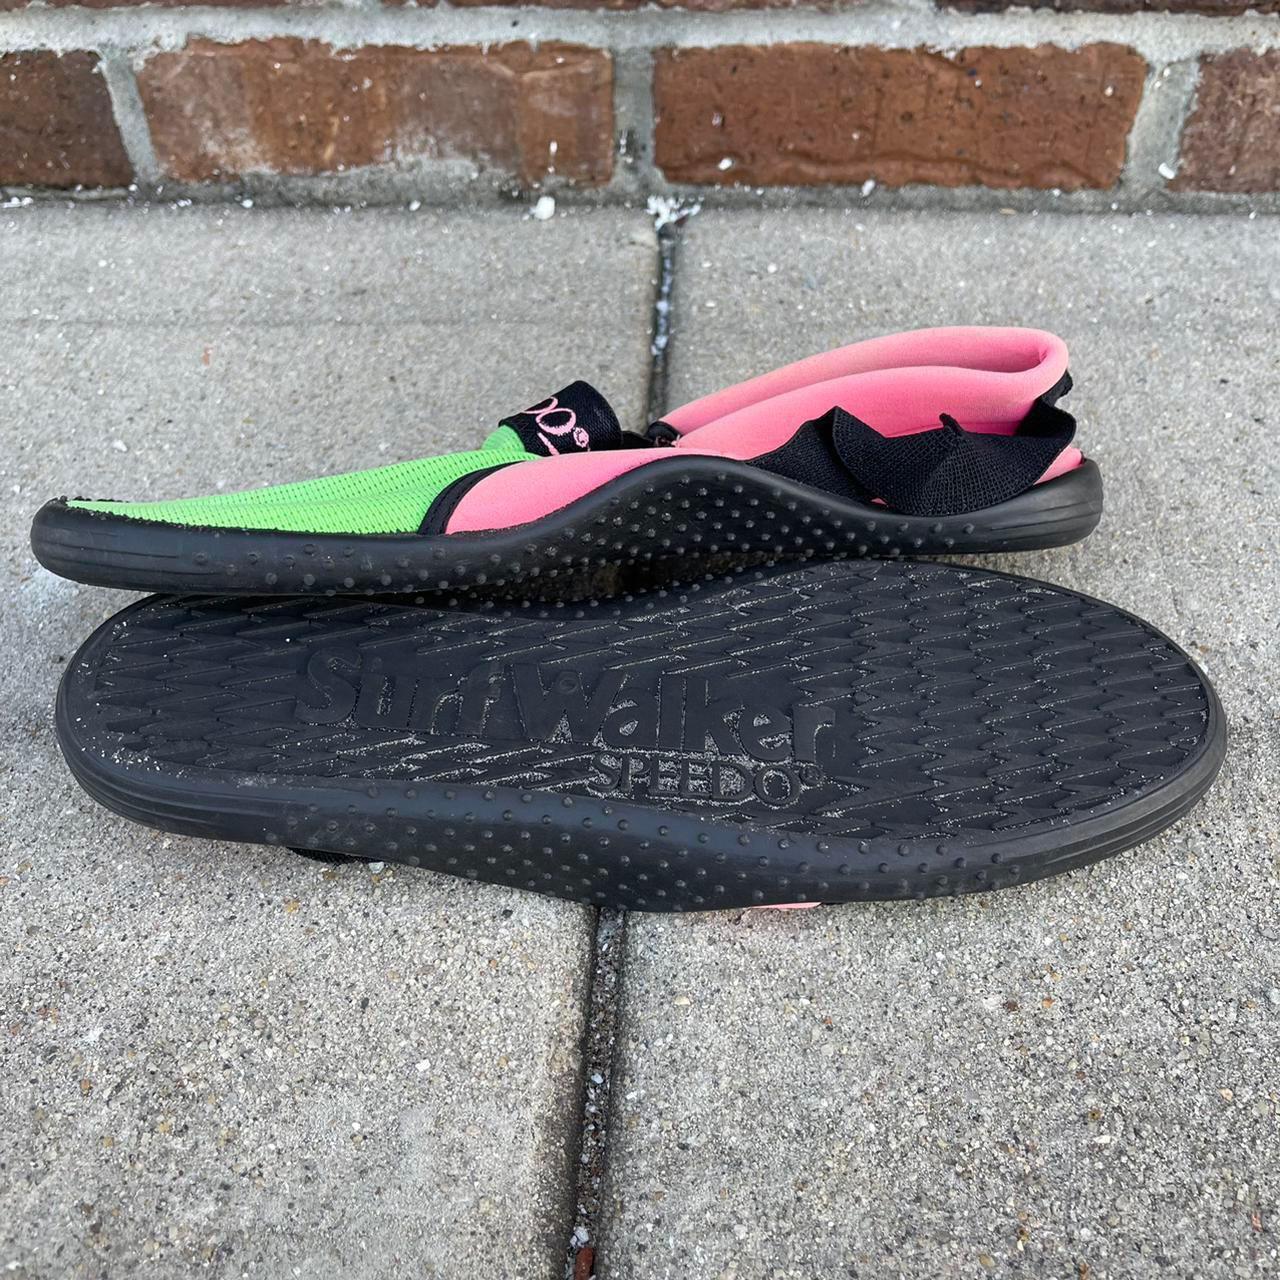 Product Image 3 - Speedo surfwalker vintage water shoes